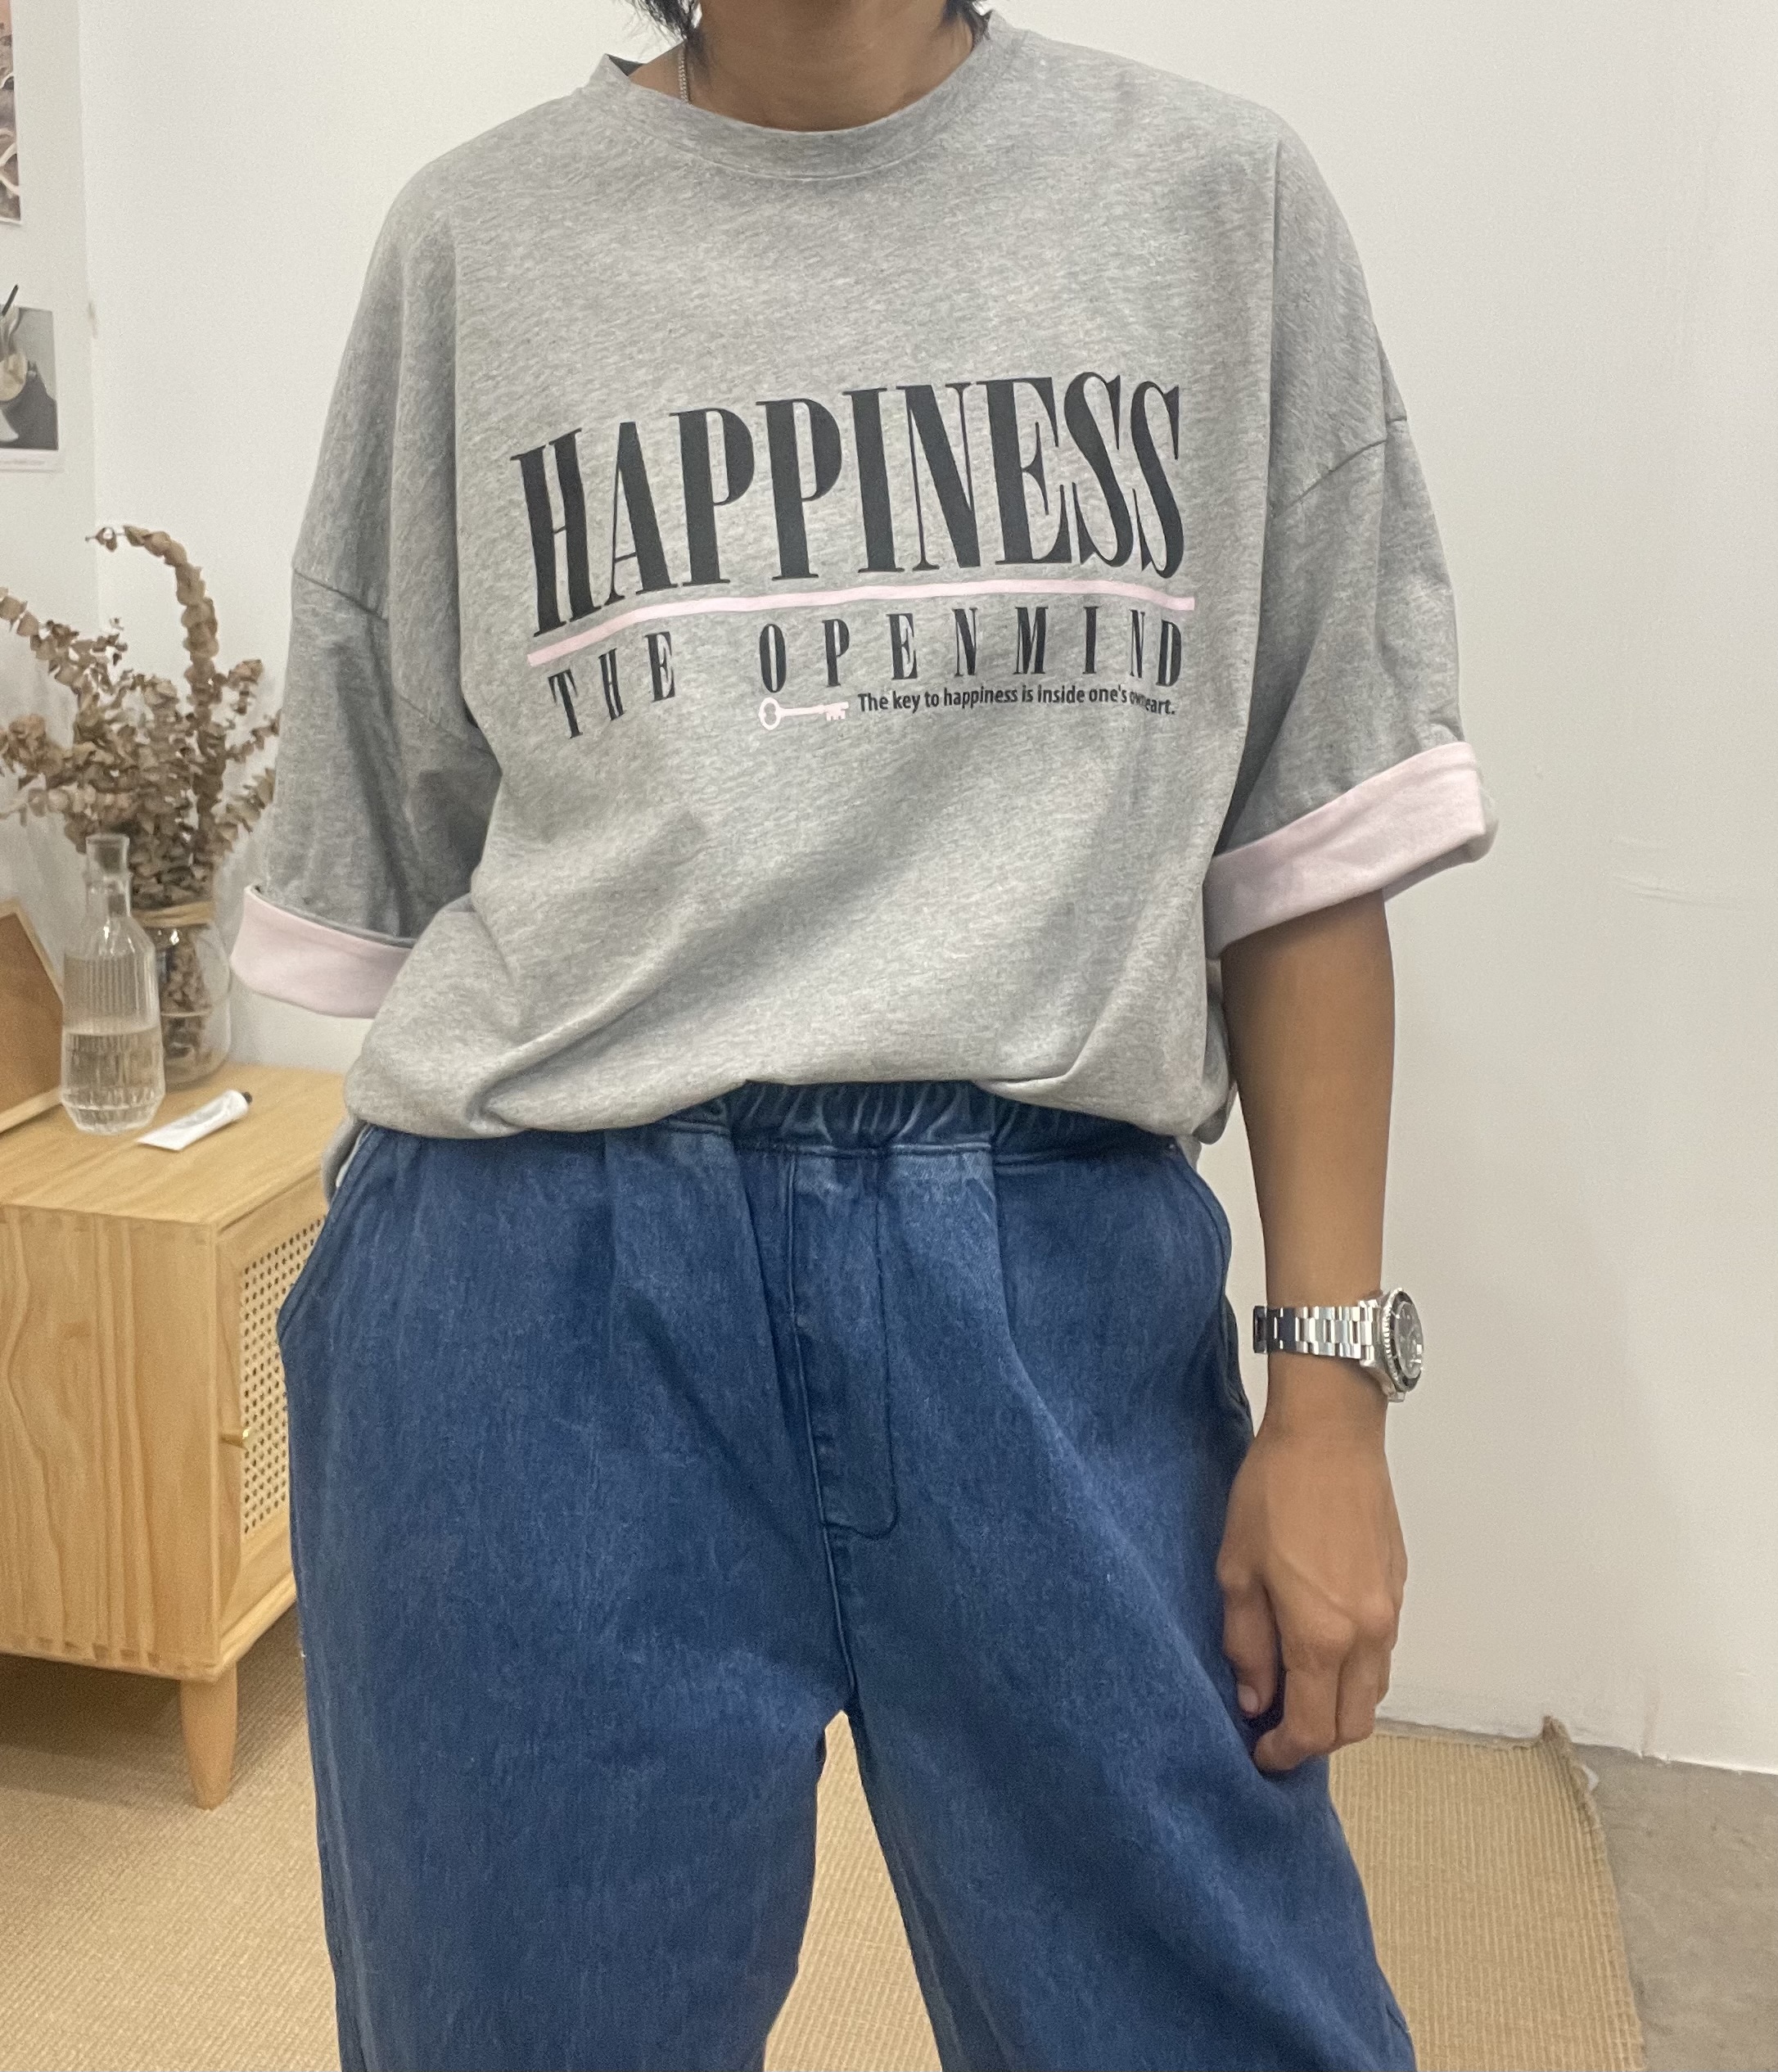 Taylor “ HAPPINESS” 2 tone sleeves tee-shirt 